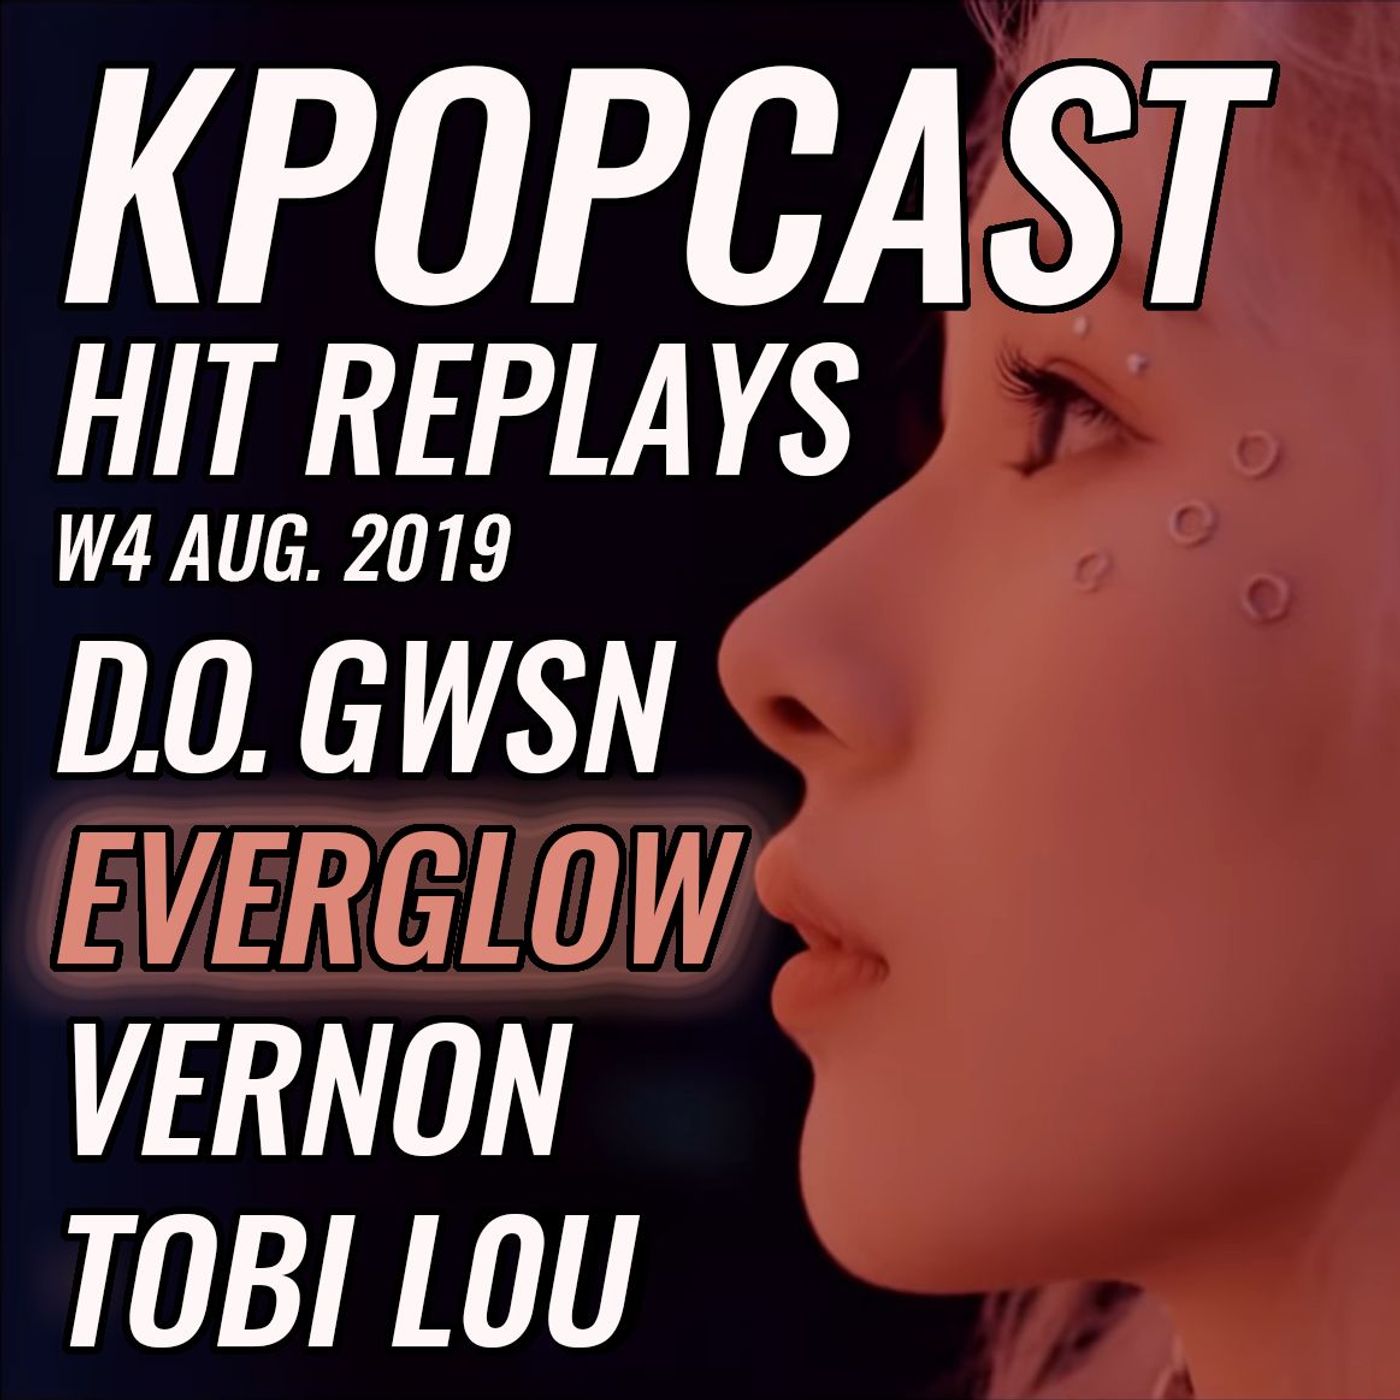 Hit Replays: D.O., GWSN, EVERGLOW, VERNON, TOBI LOU W4 Aug 2019